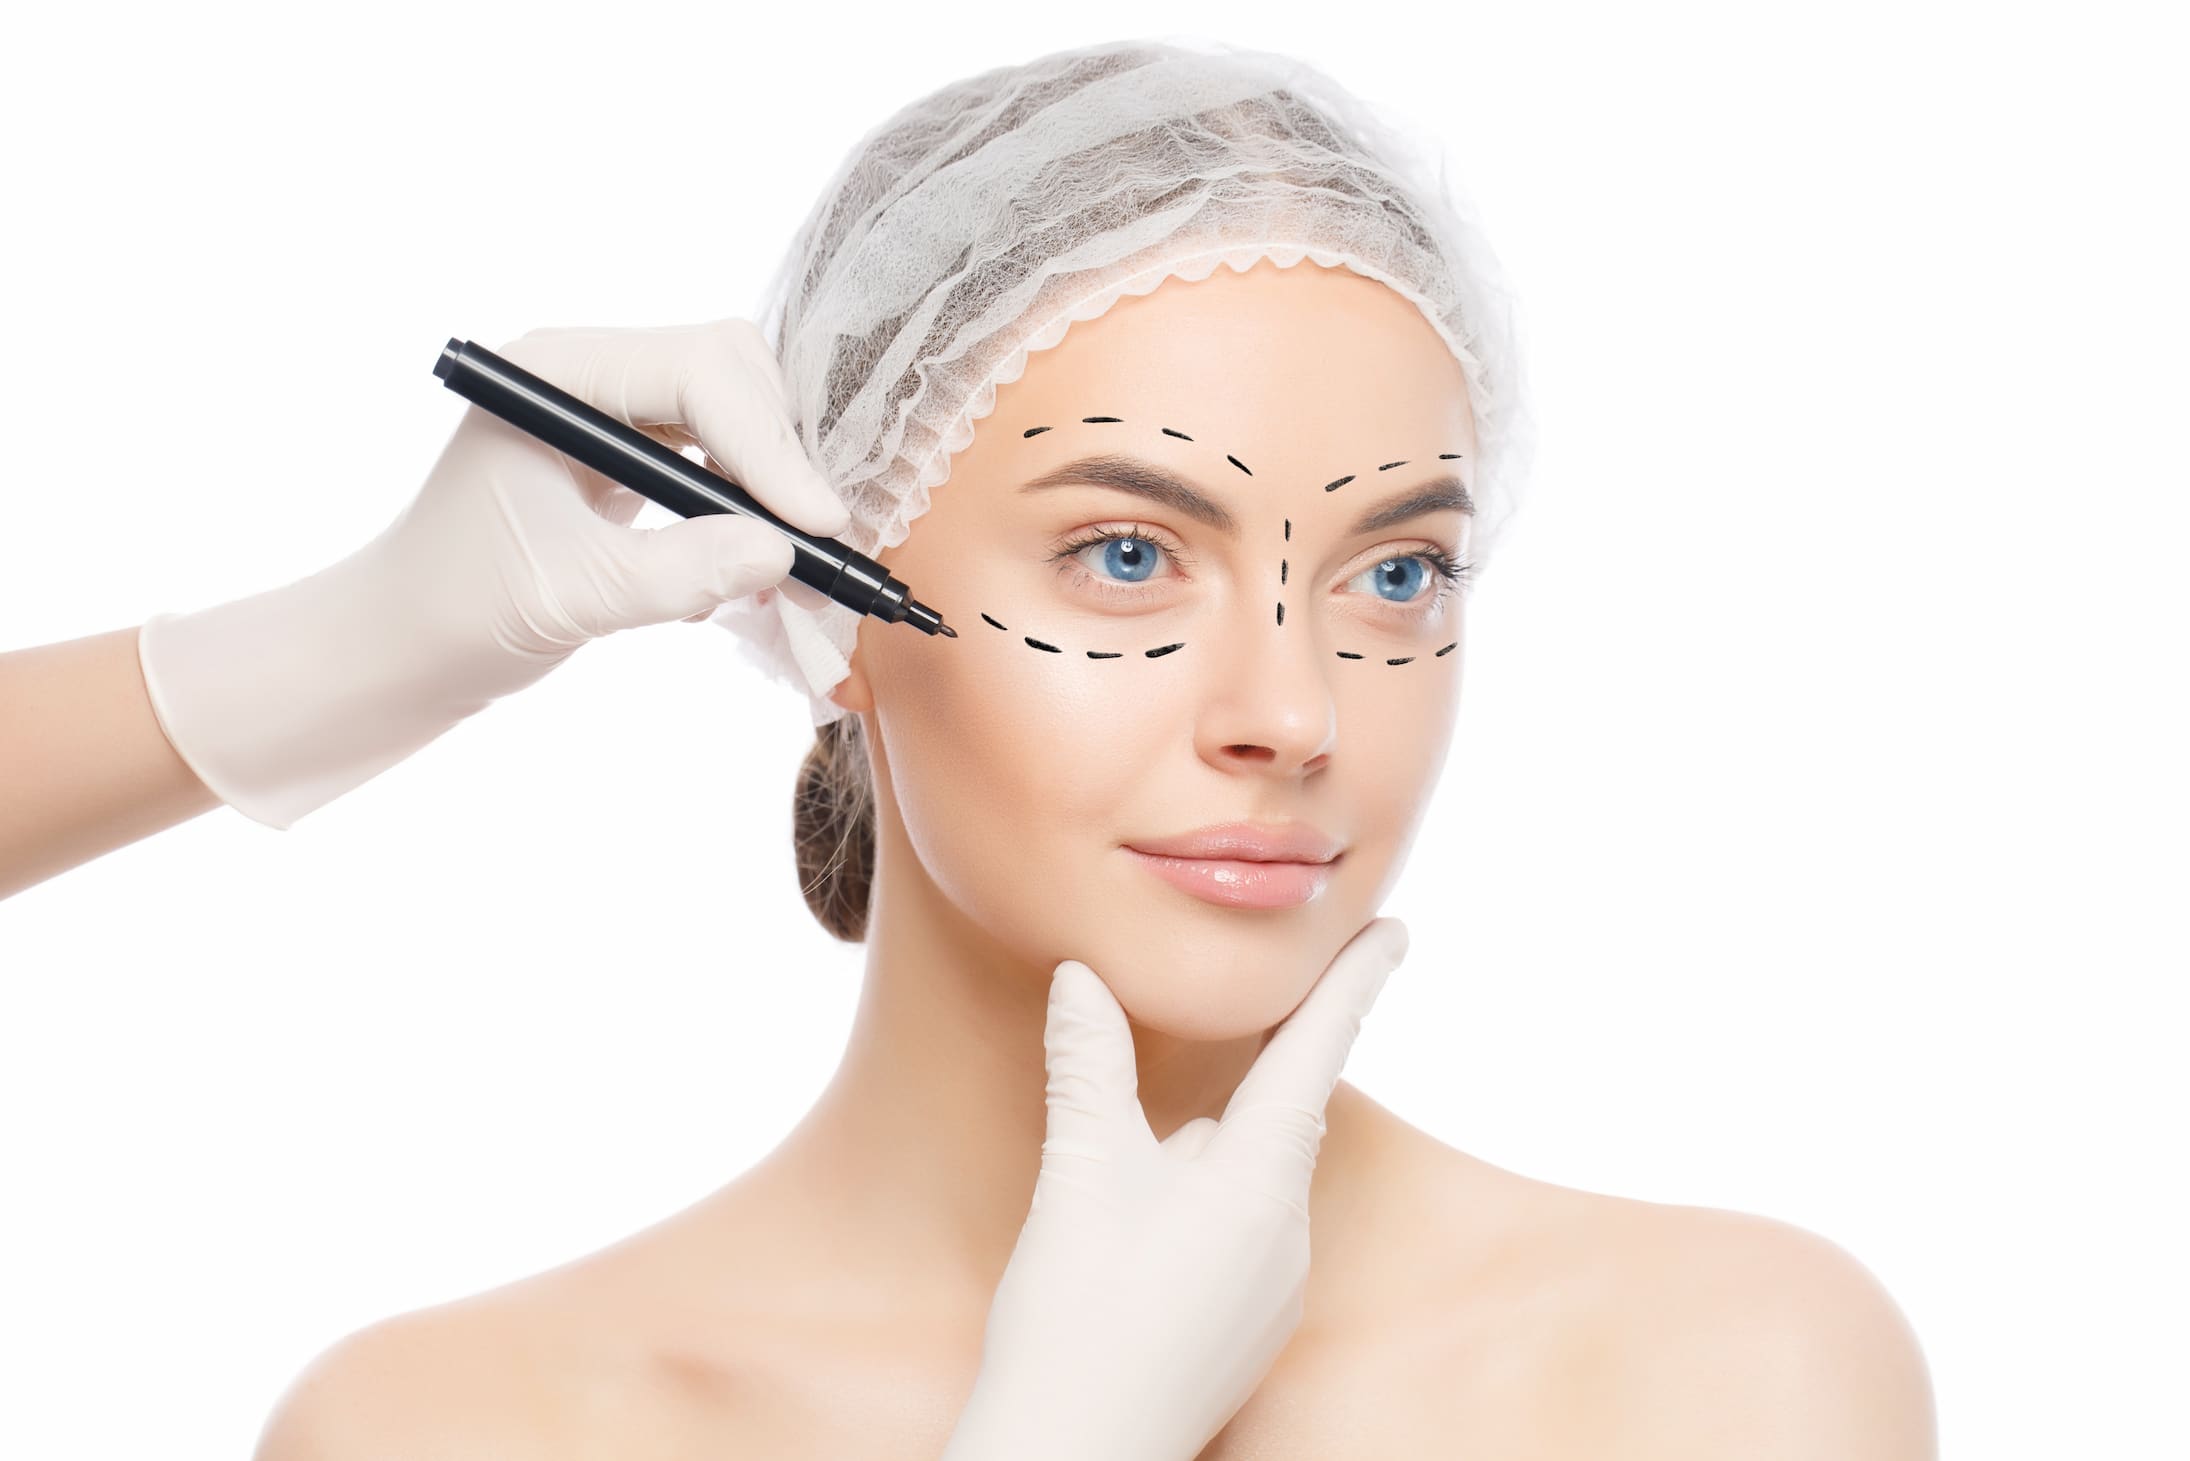 Turkiye oculofacial plastic surgery procedure